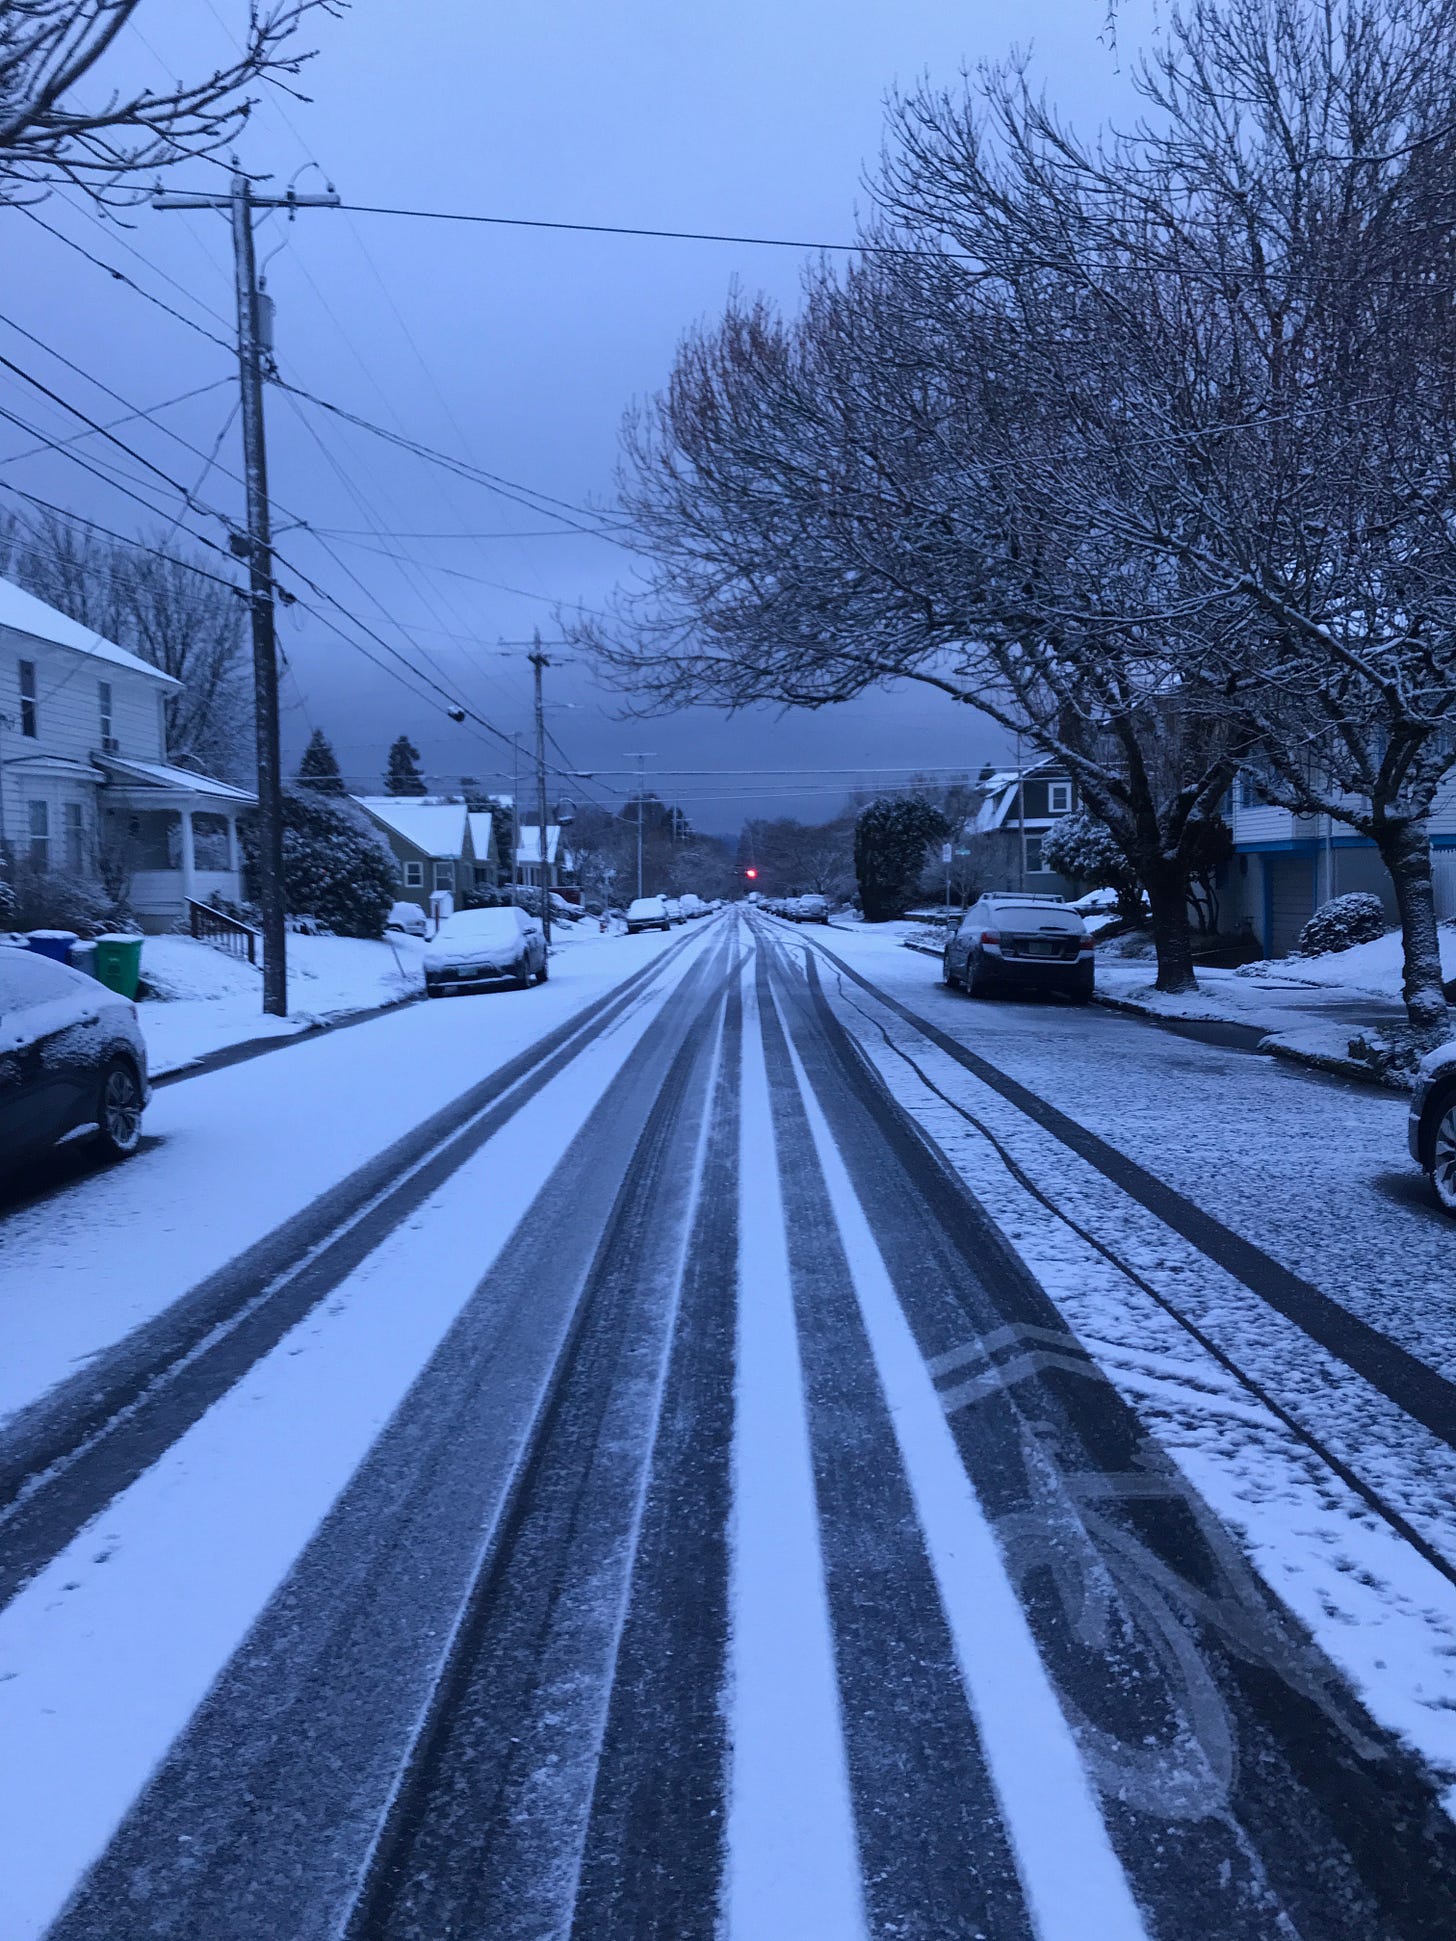 an icy neighborhood street